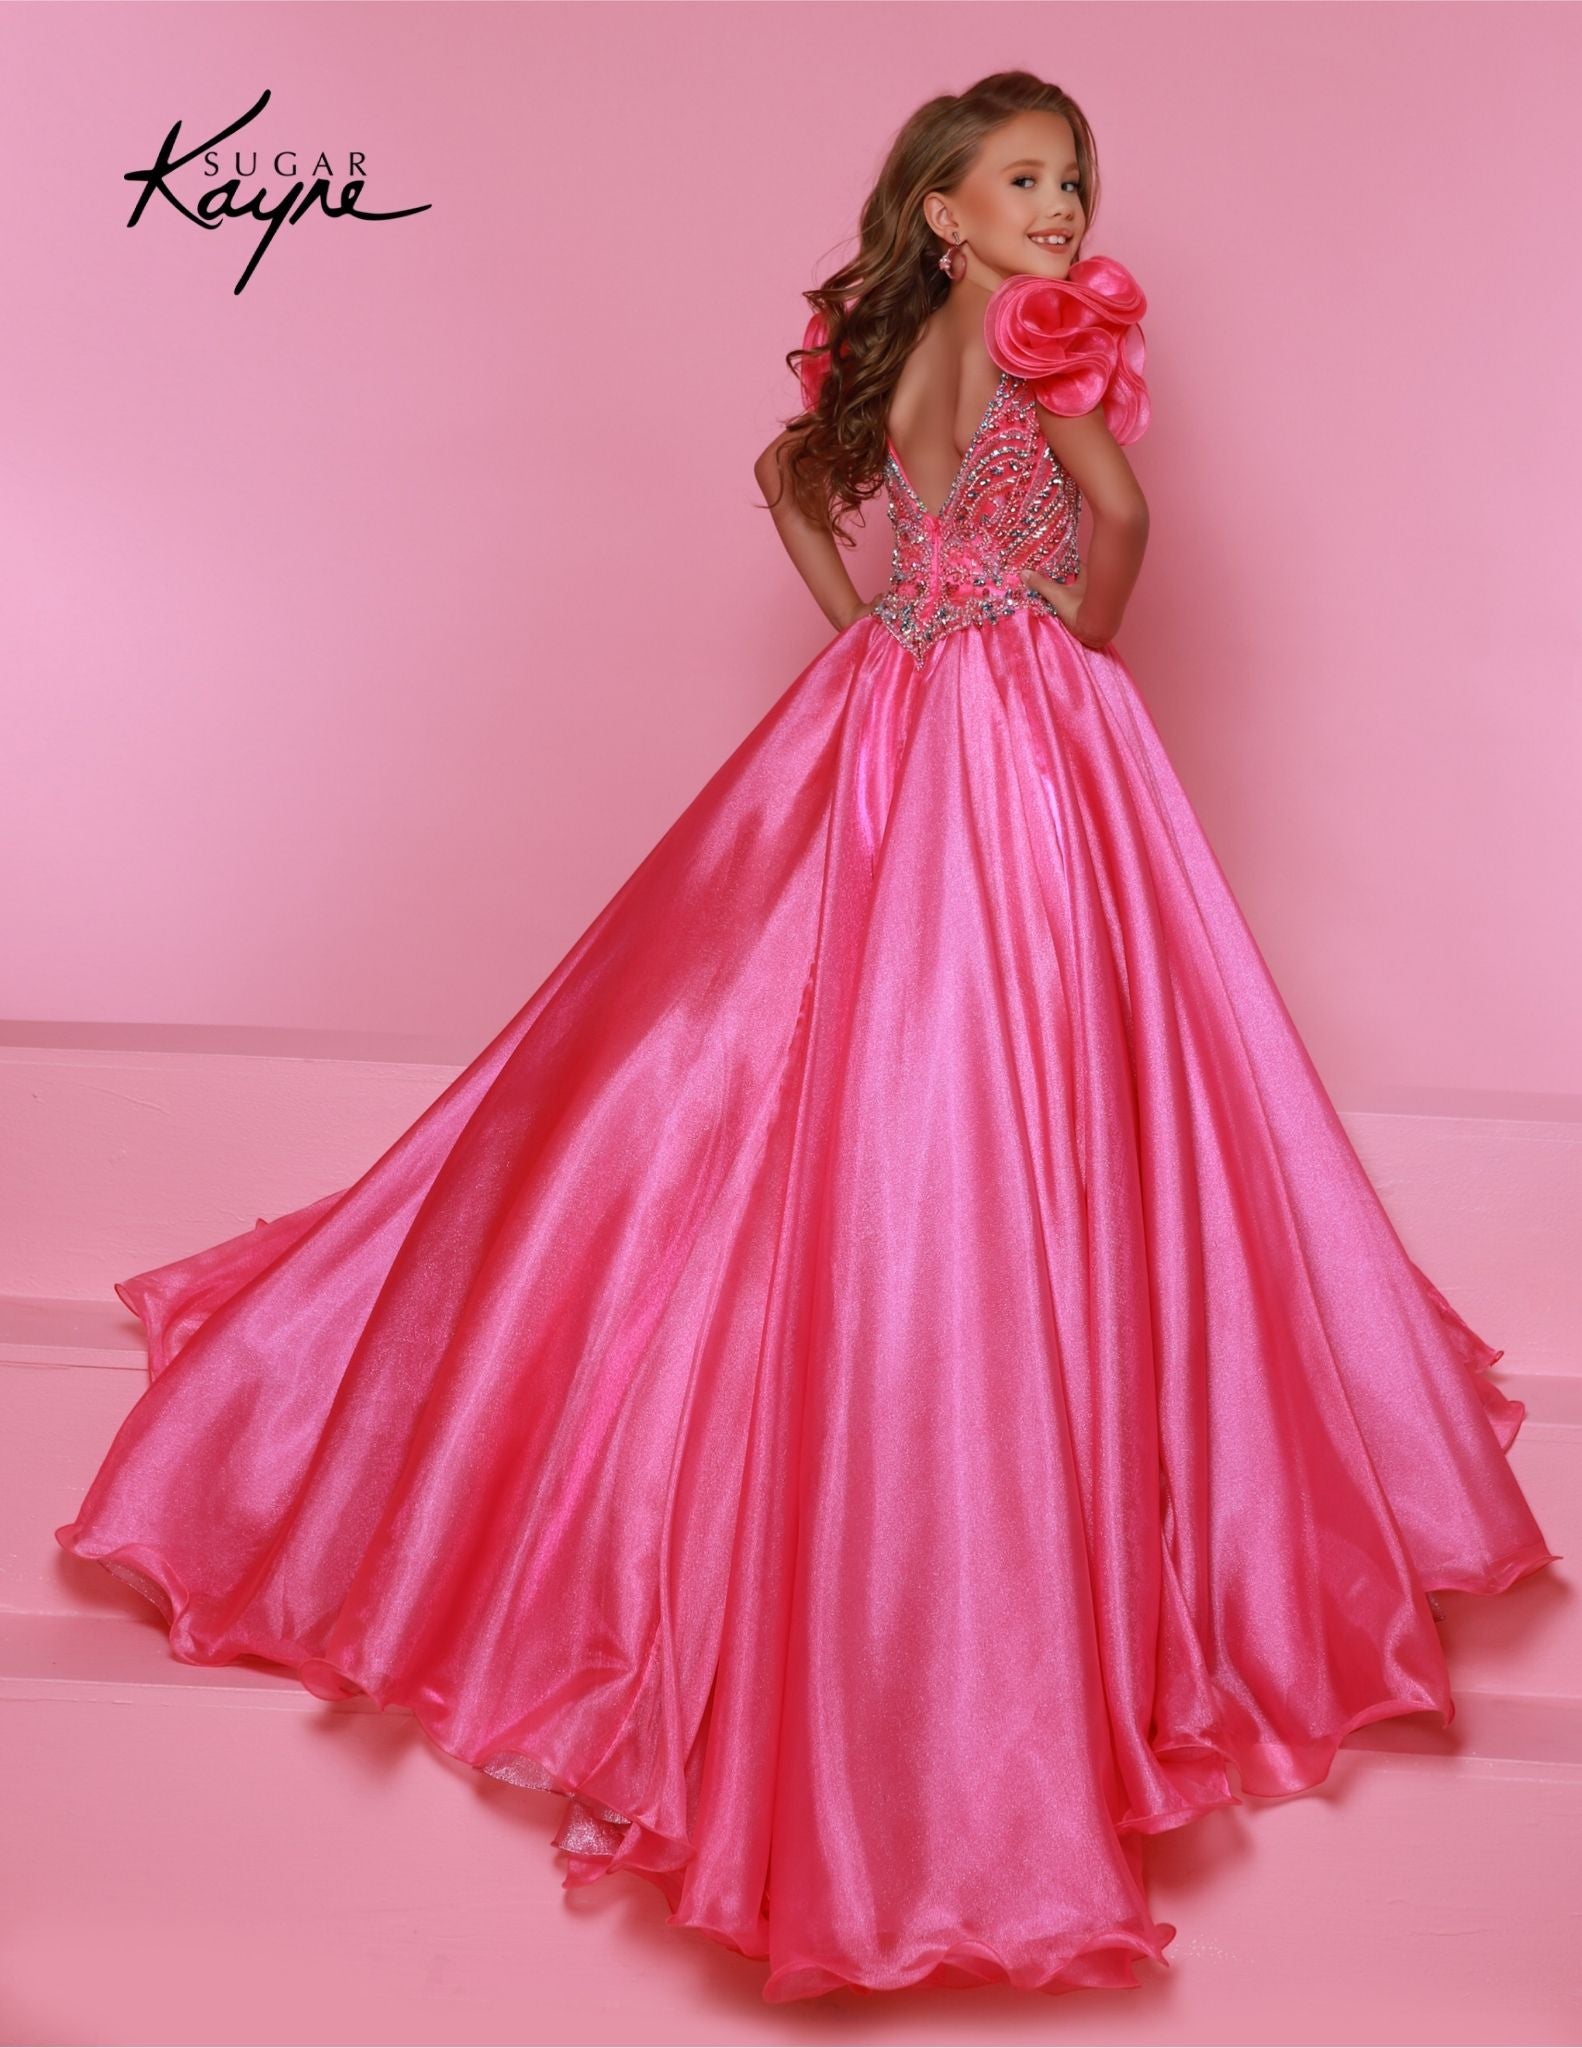 Plus Size Lilac Taffeta Civil War Dress/Ballgown*58